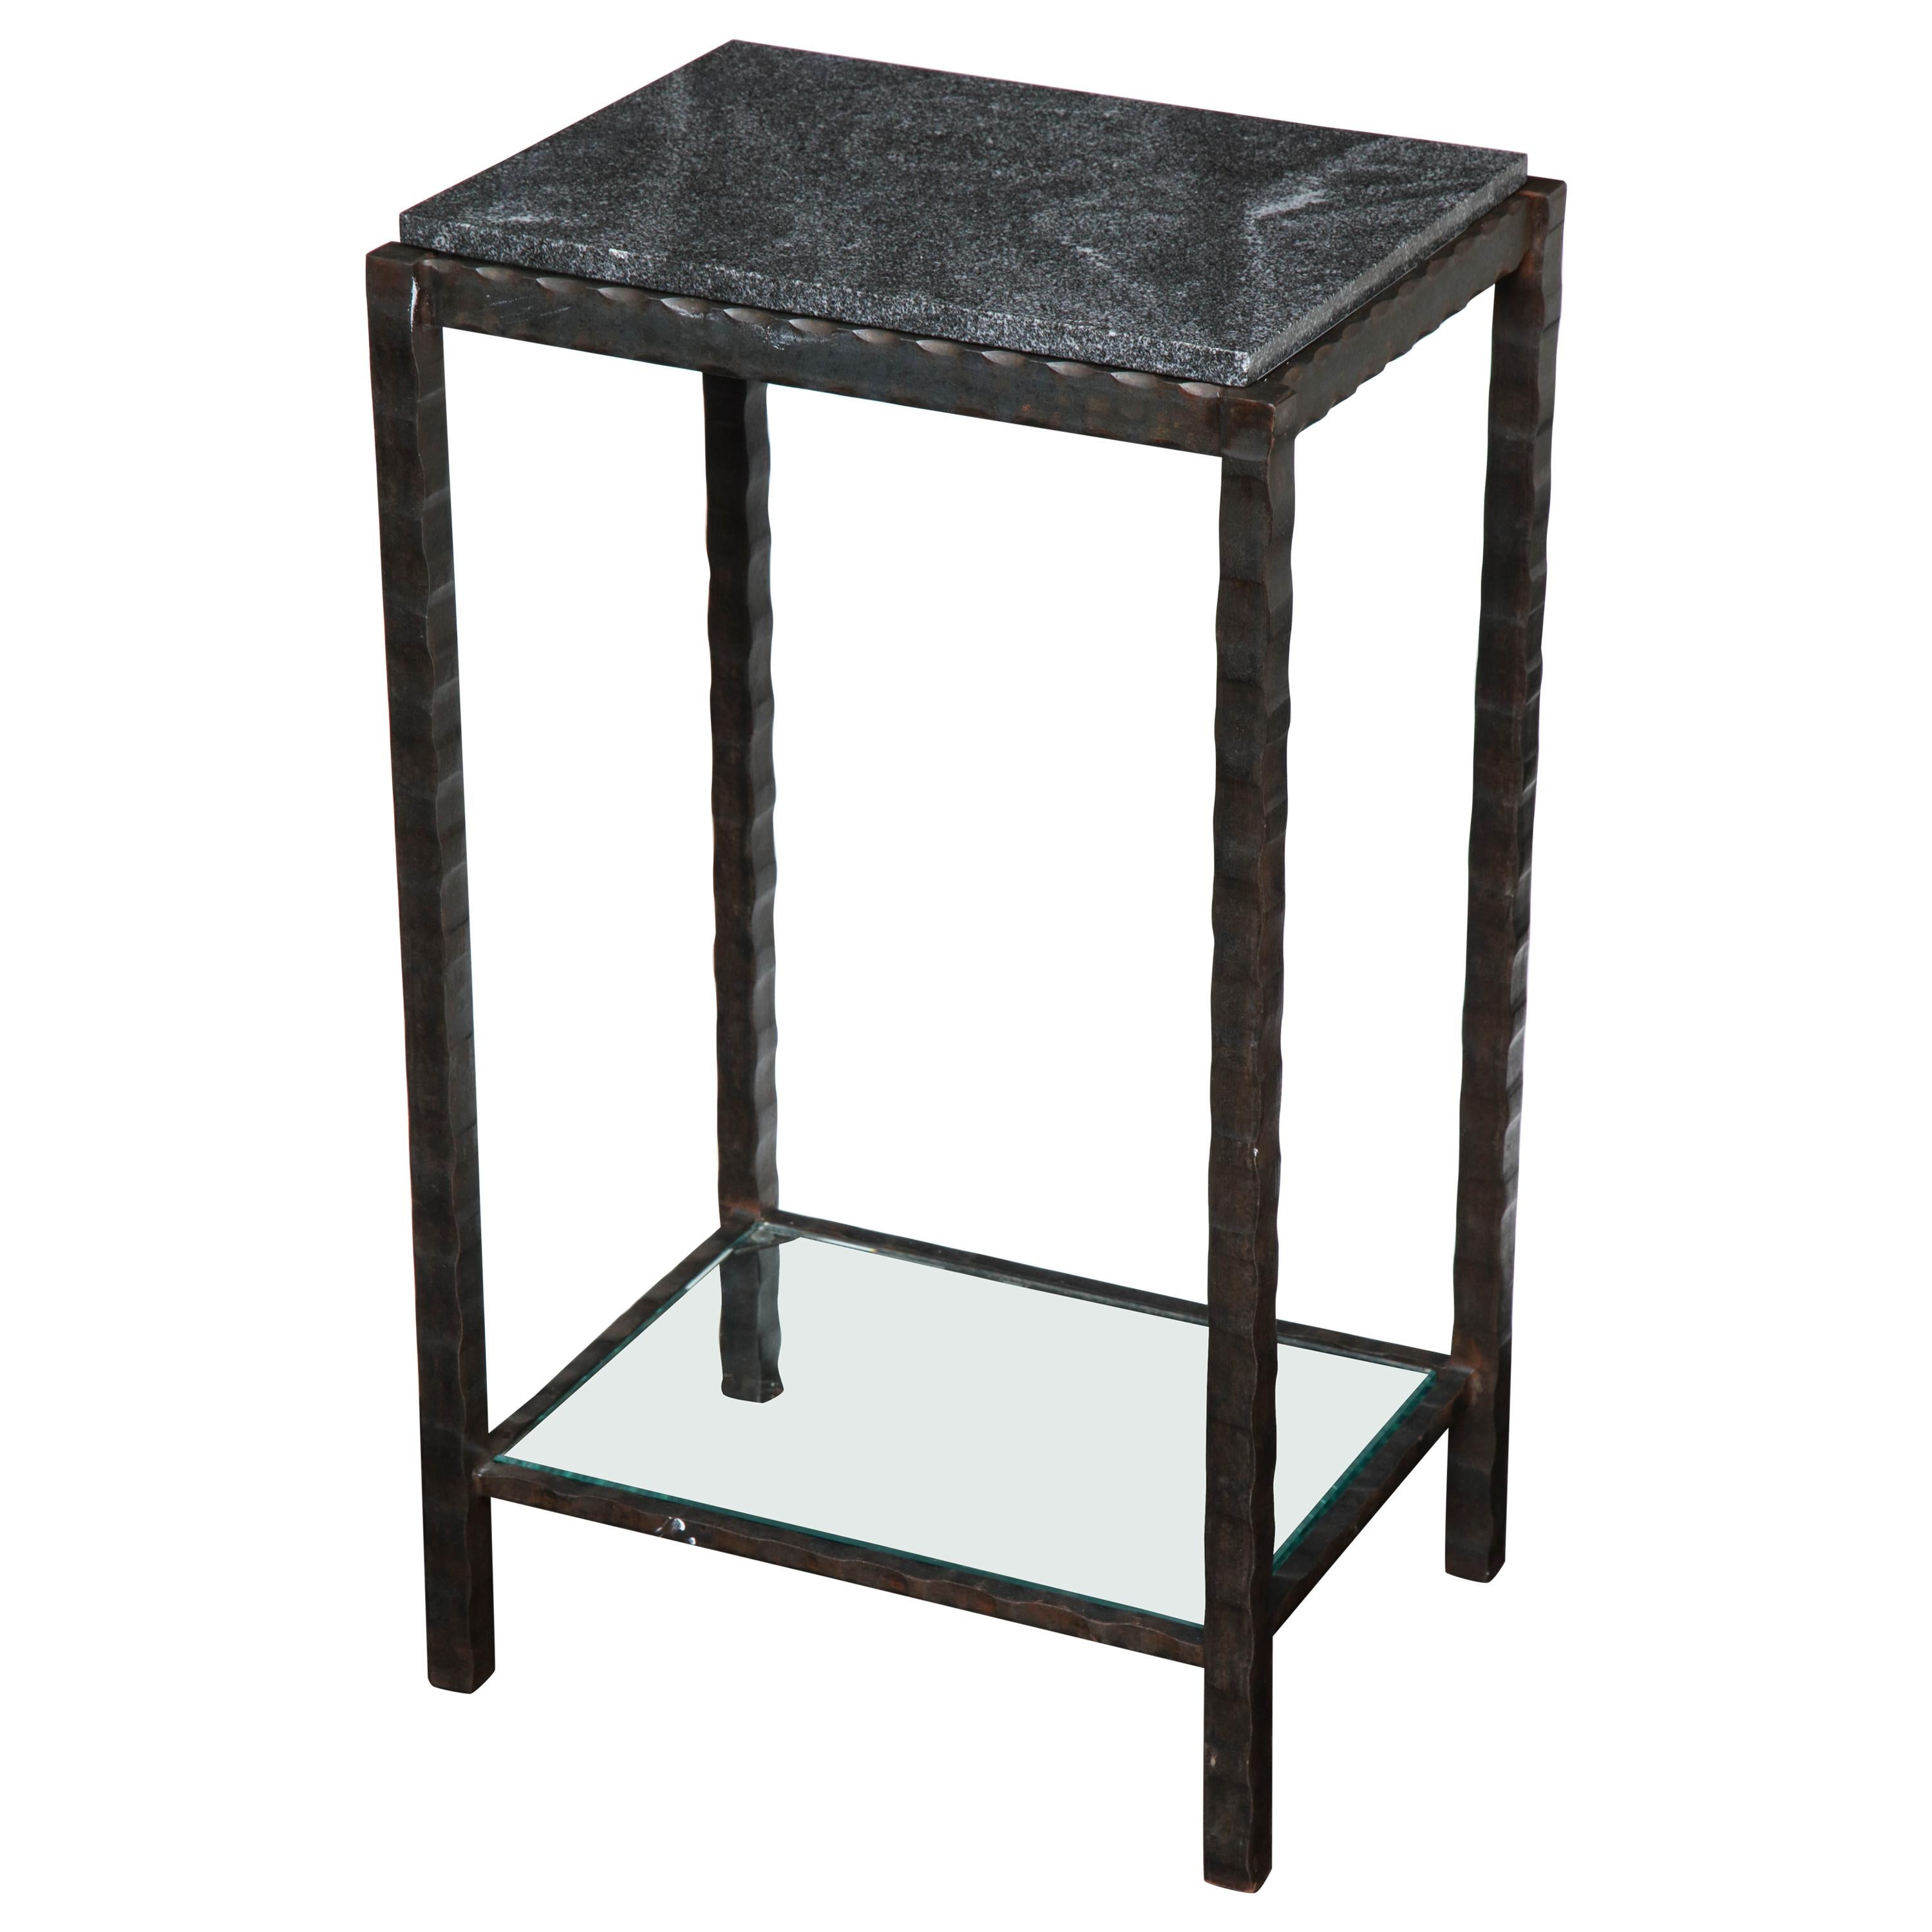 Dazzling Granite Side Table in Hammered Steel Frame